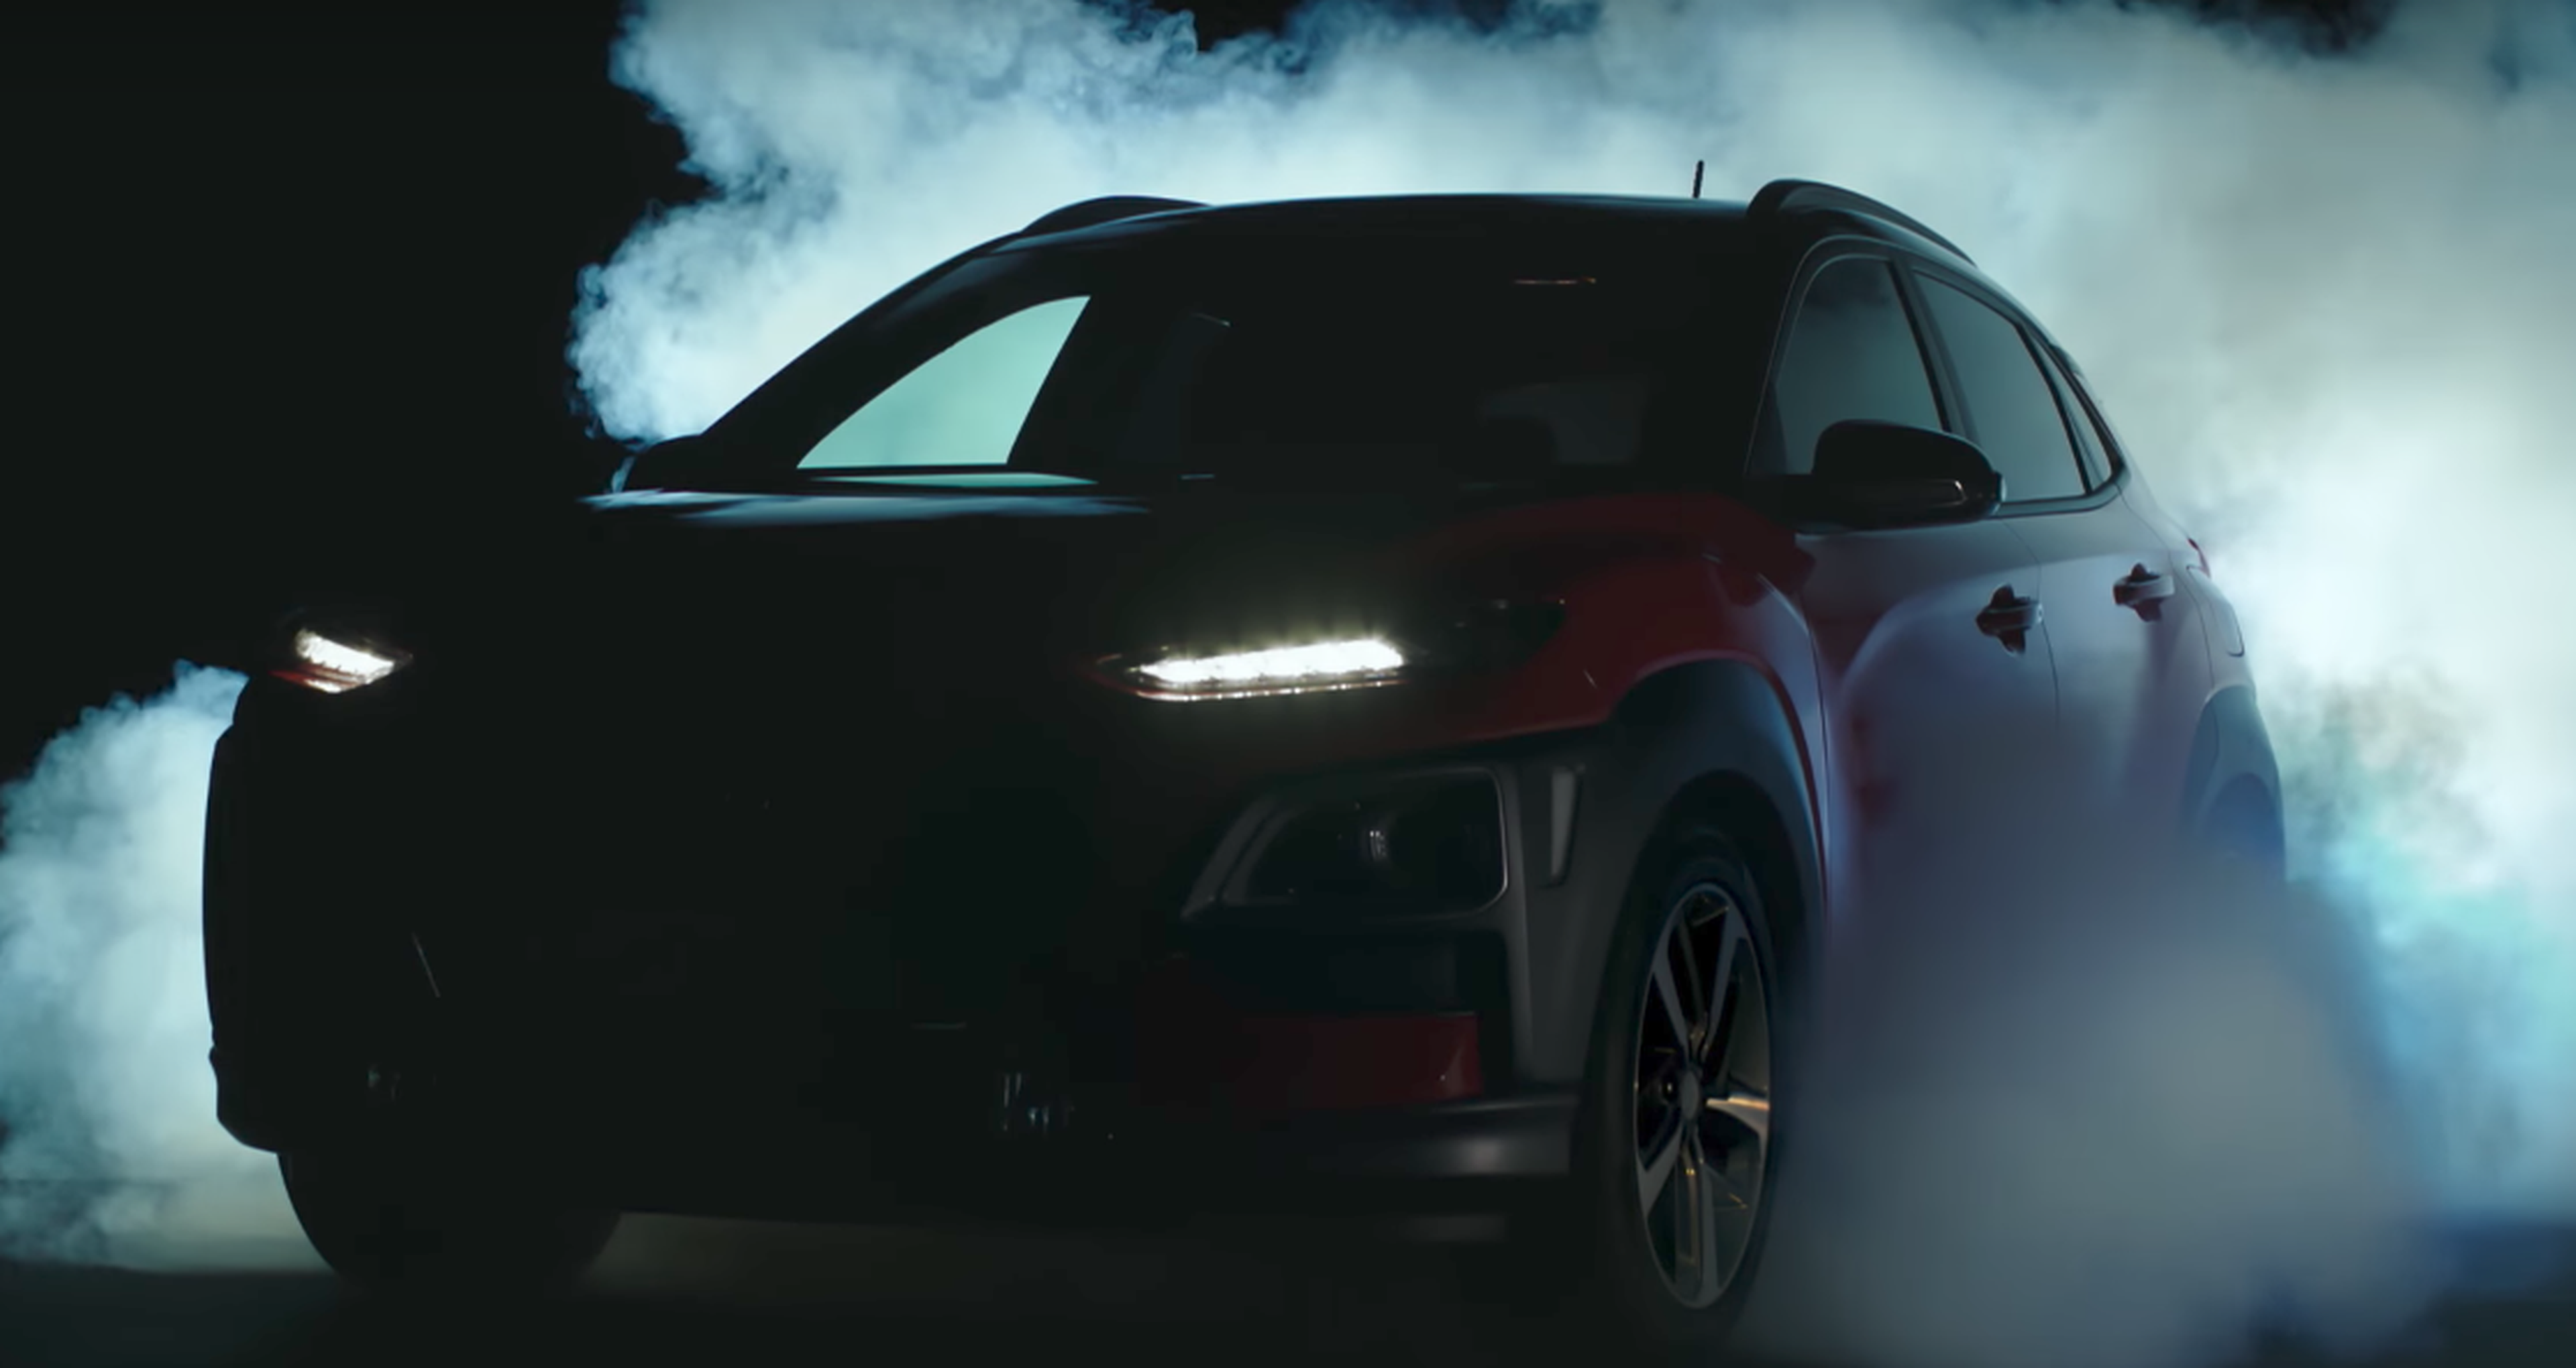 VÍDEO: Mira este teaser del próximo Hyundai Kona 2017